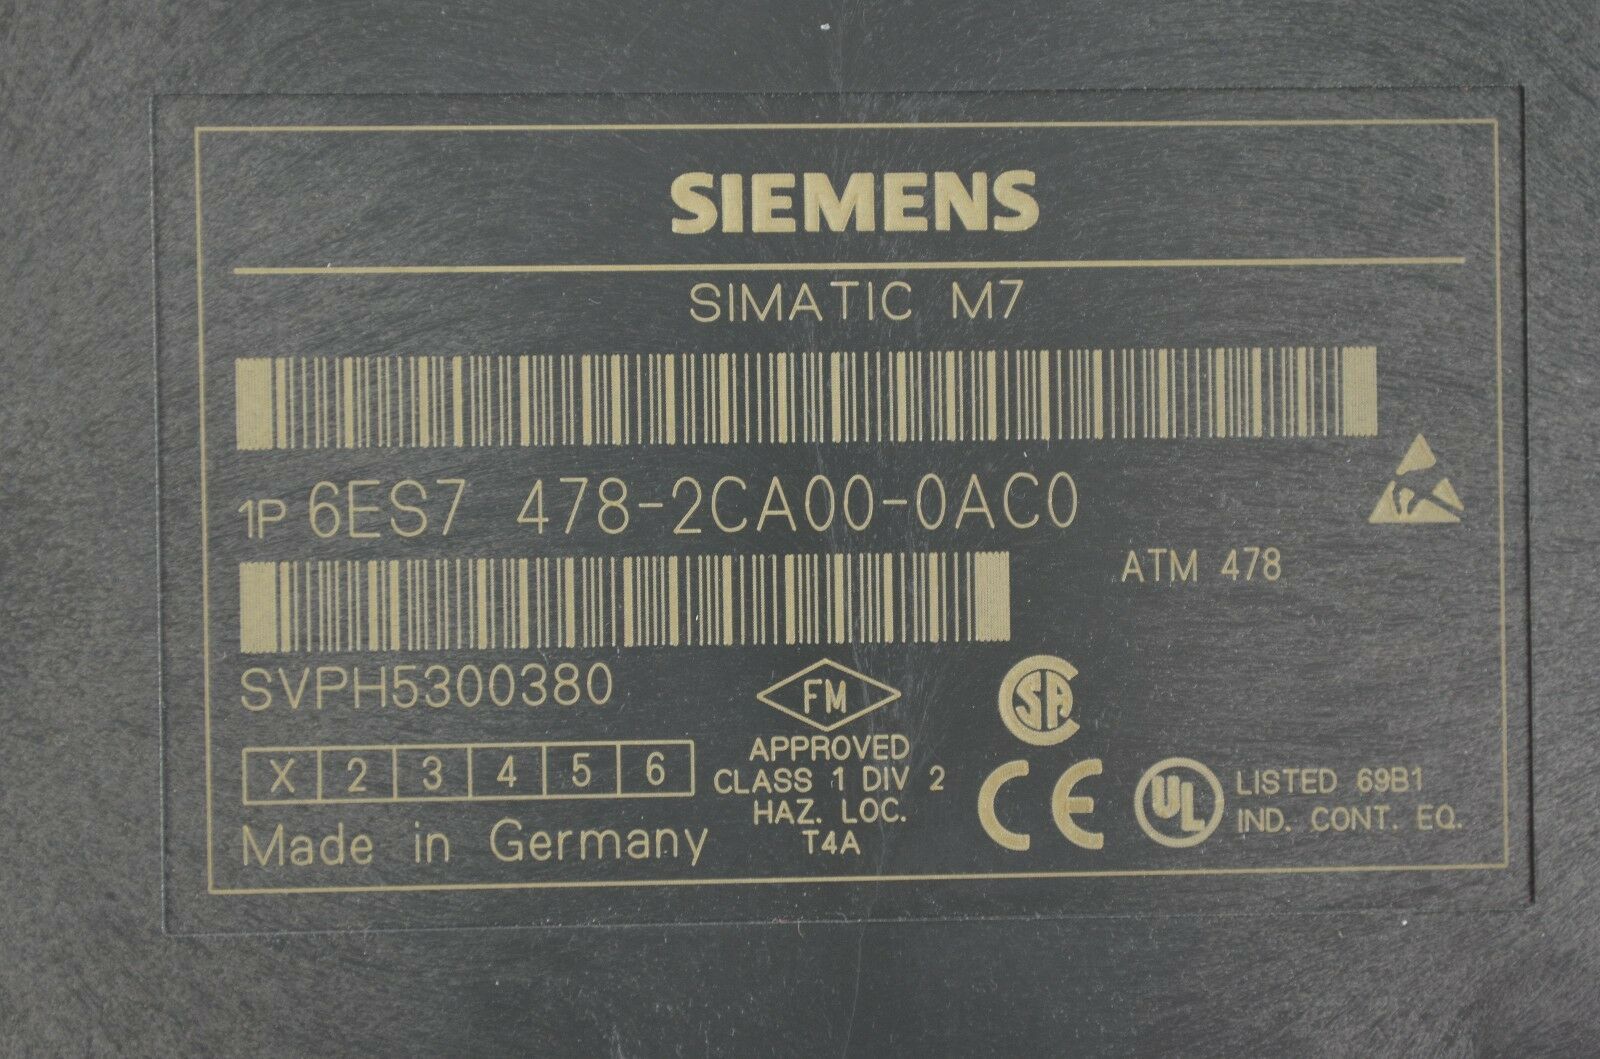 Siemens simatic M7-400 S7 ATM478 6ES7478-2CA00-0AC0 ( 6ES7 478-2CA00-0AC0 ) E1